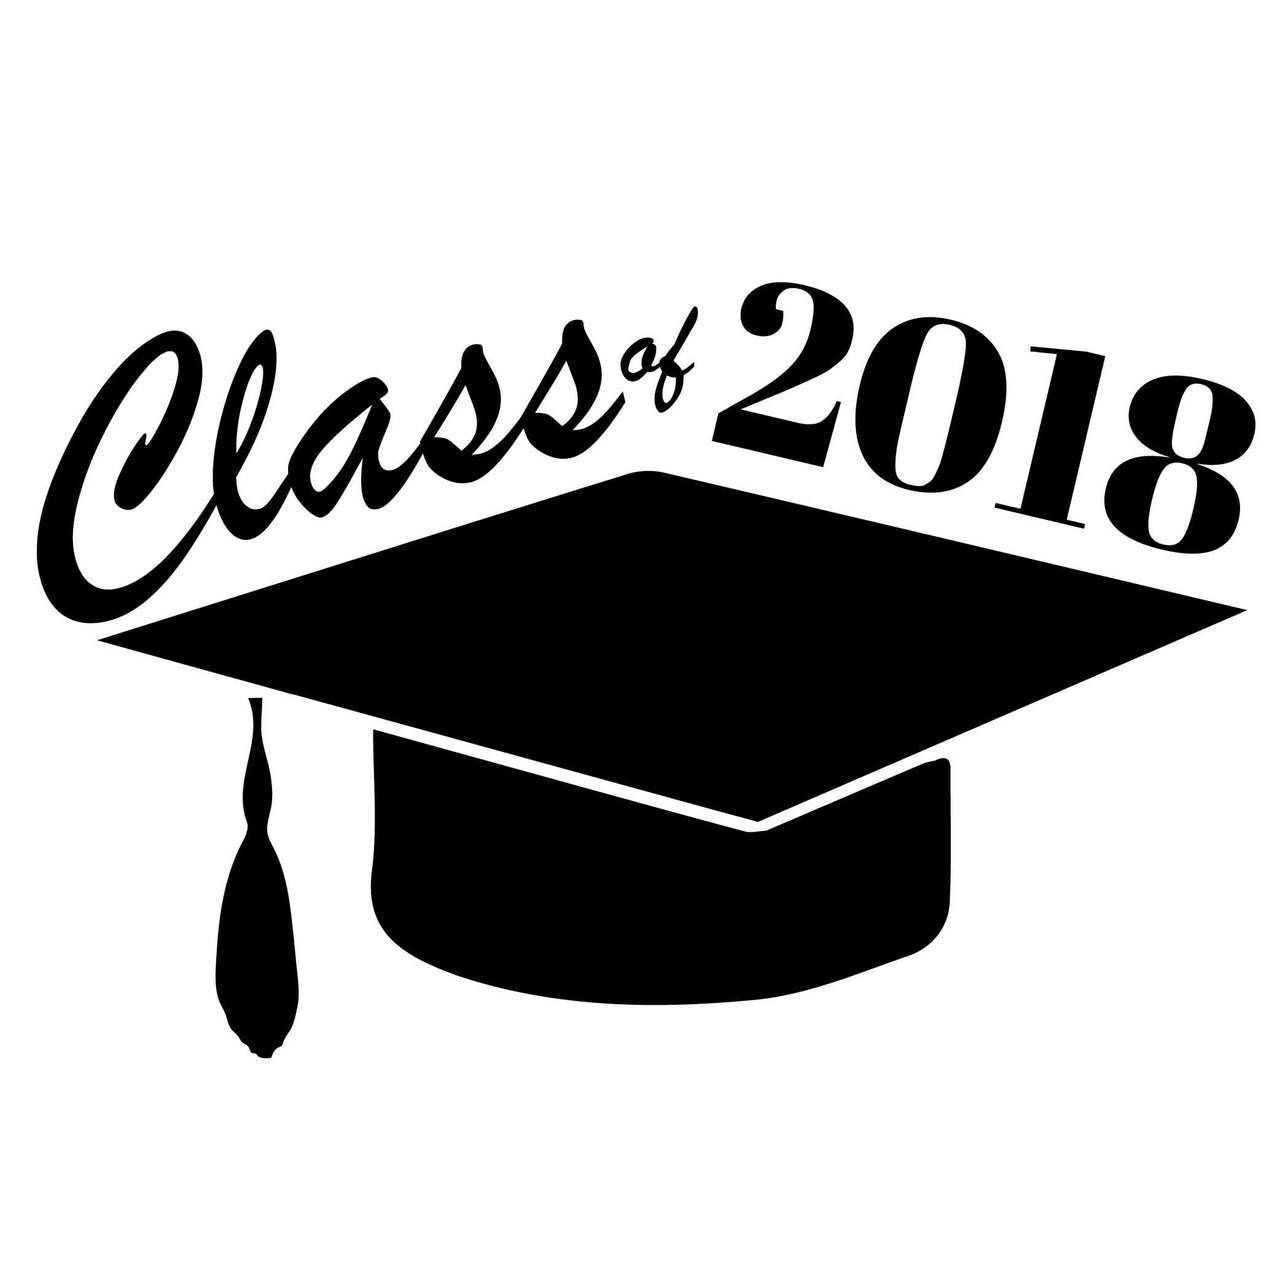 Pin on ideas . 2018 clipart graduation hat